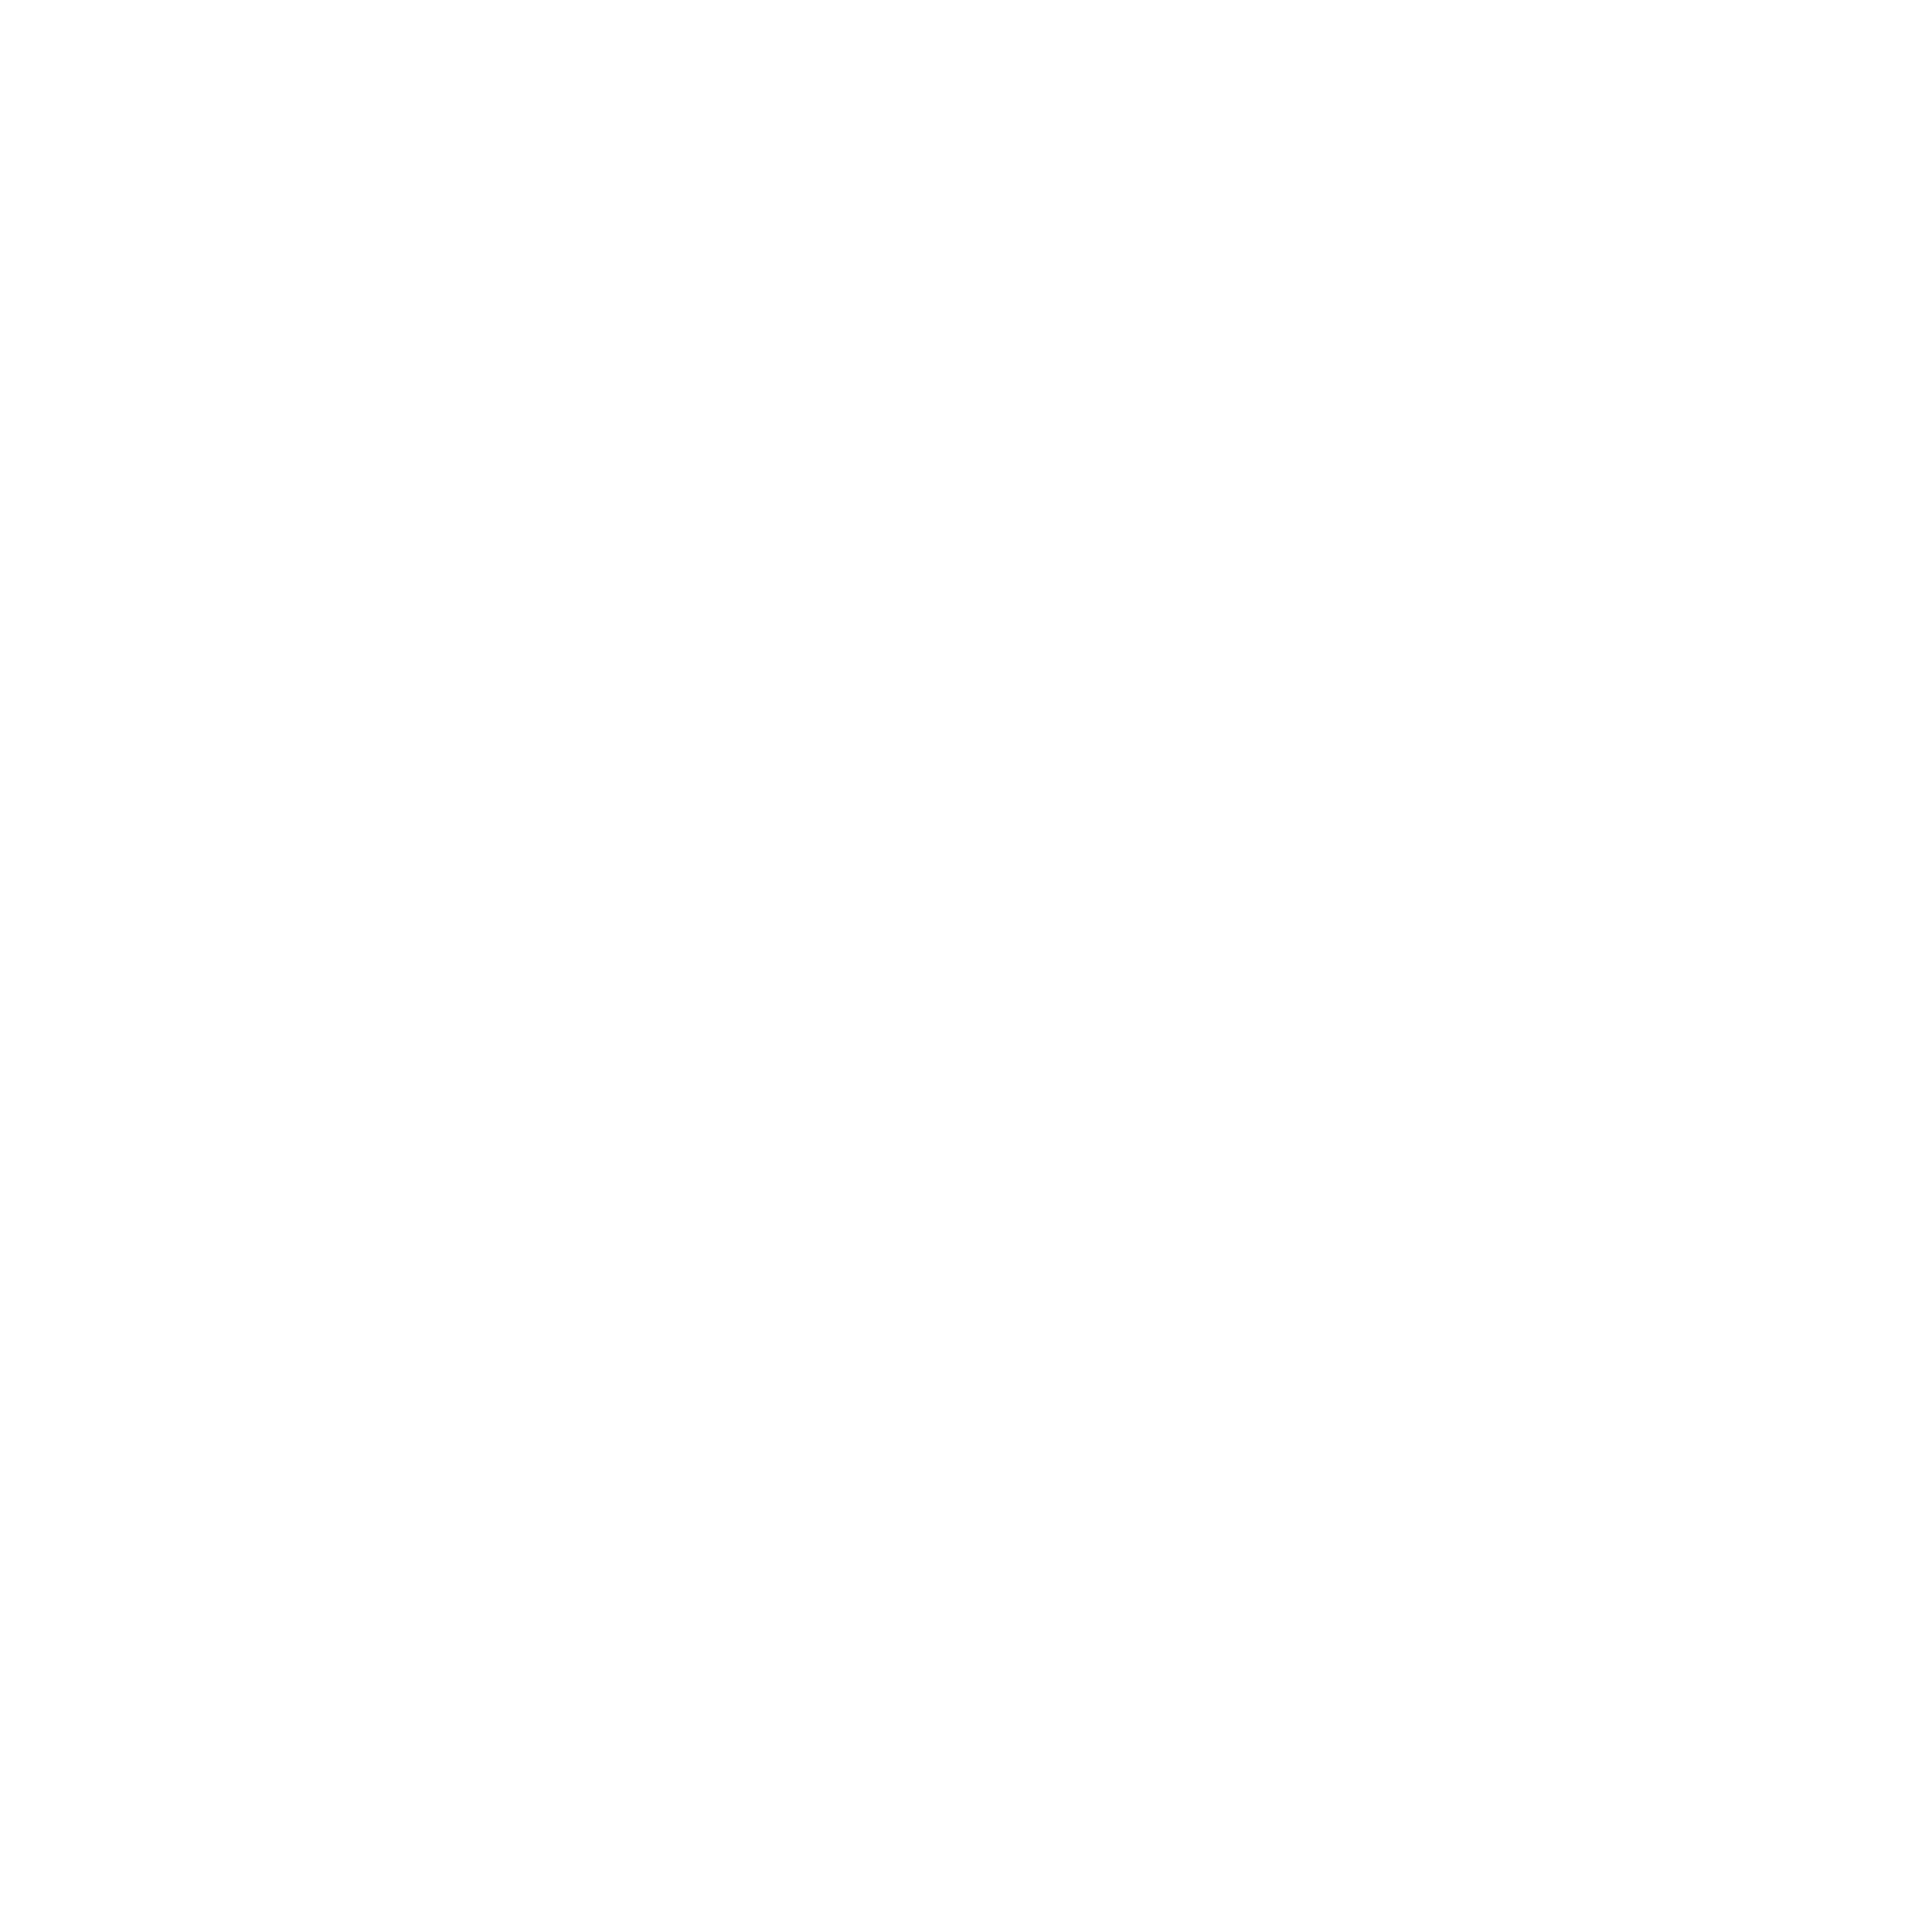 Hart-logos-black-trans2.png